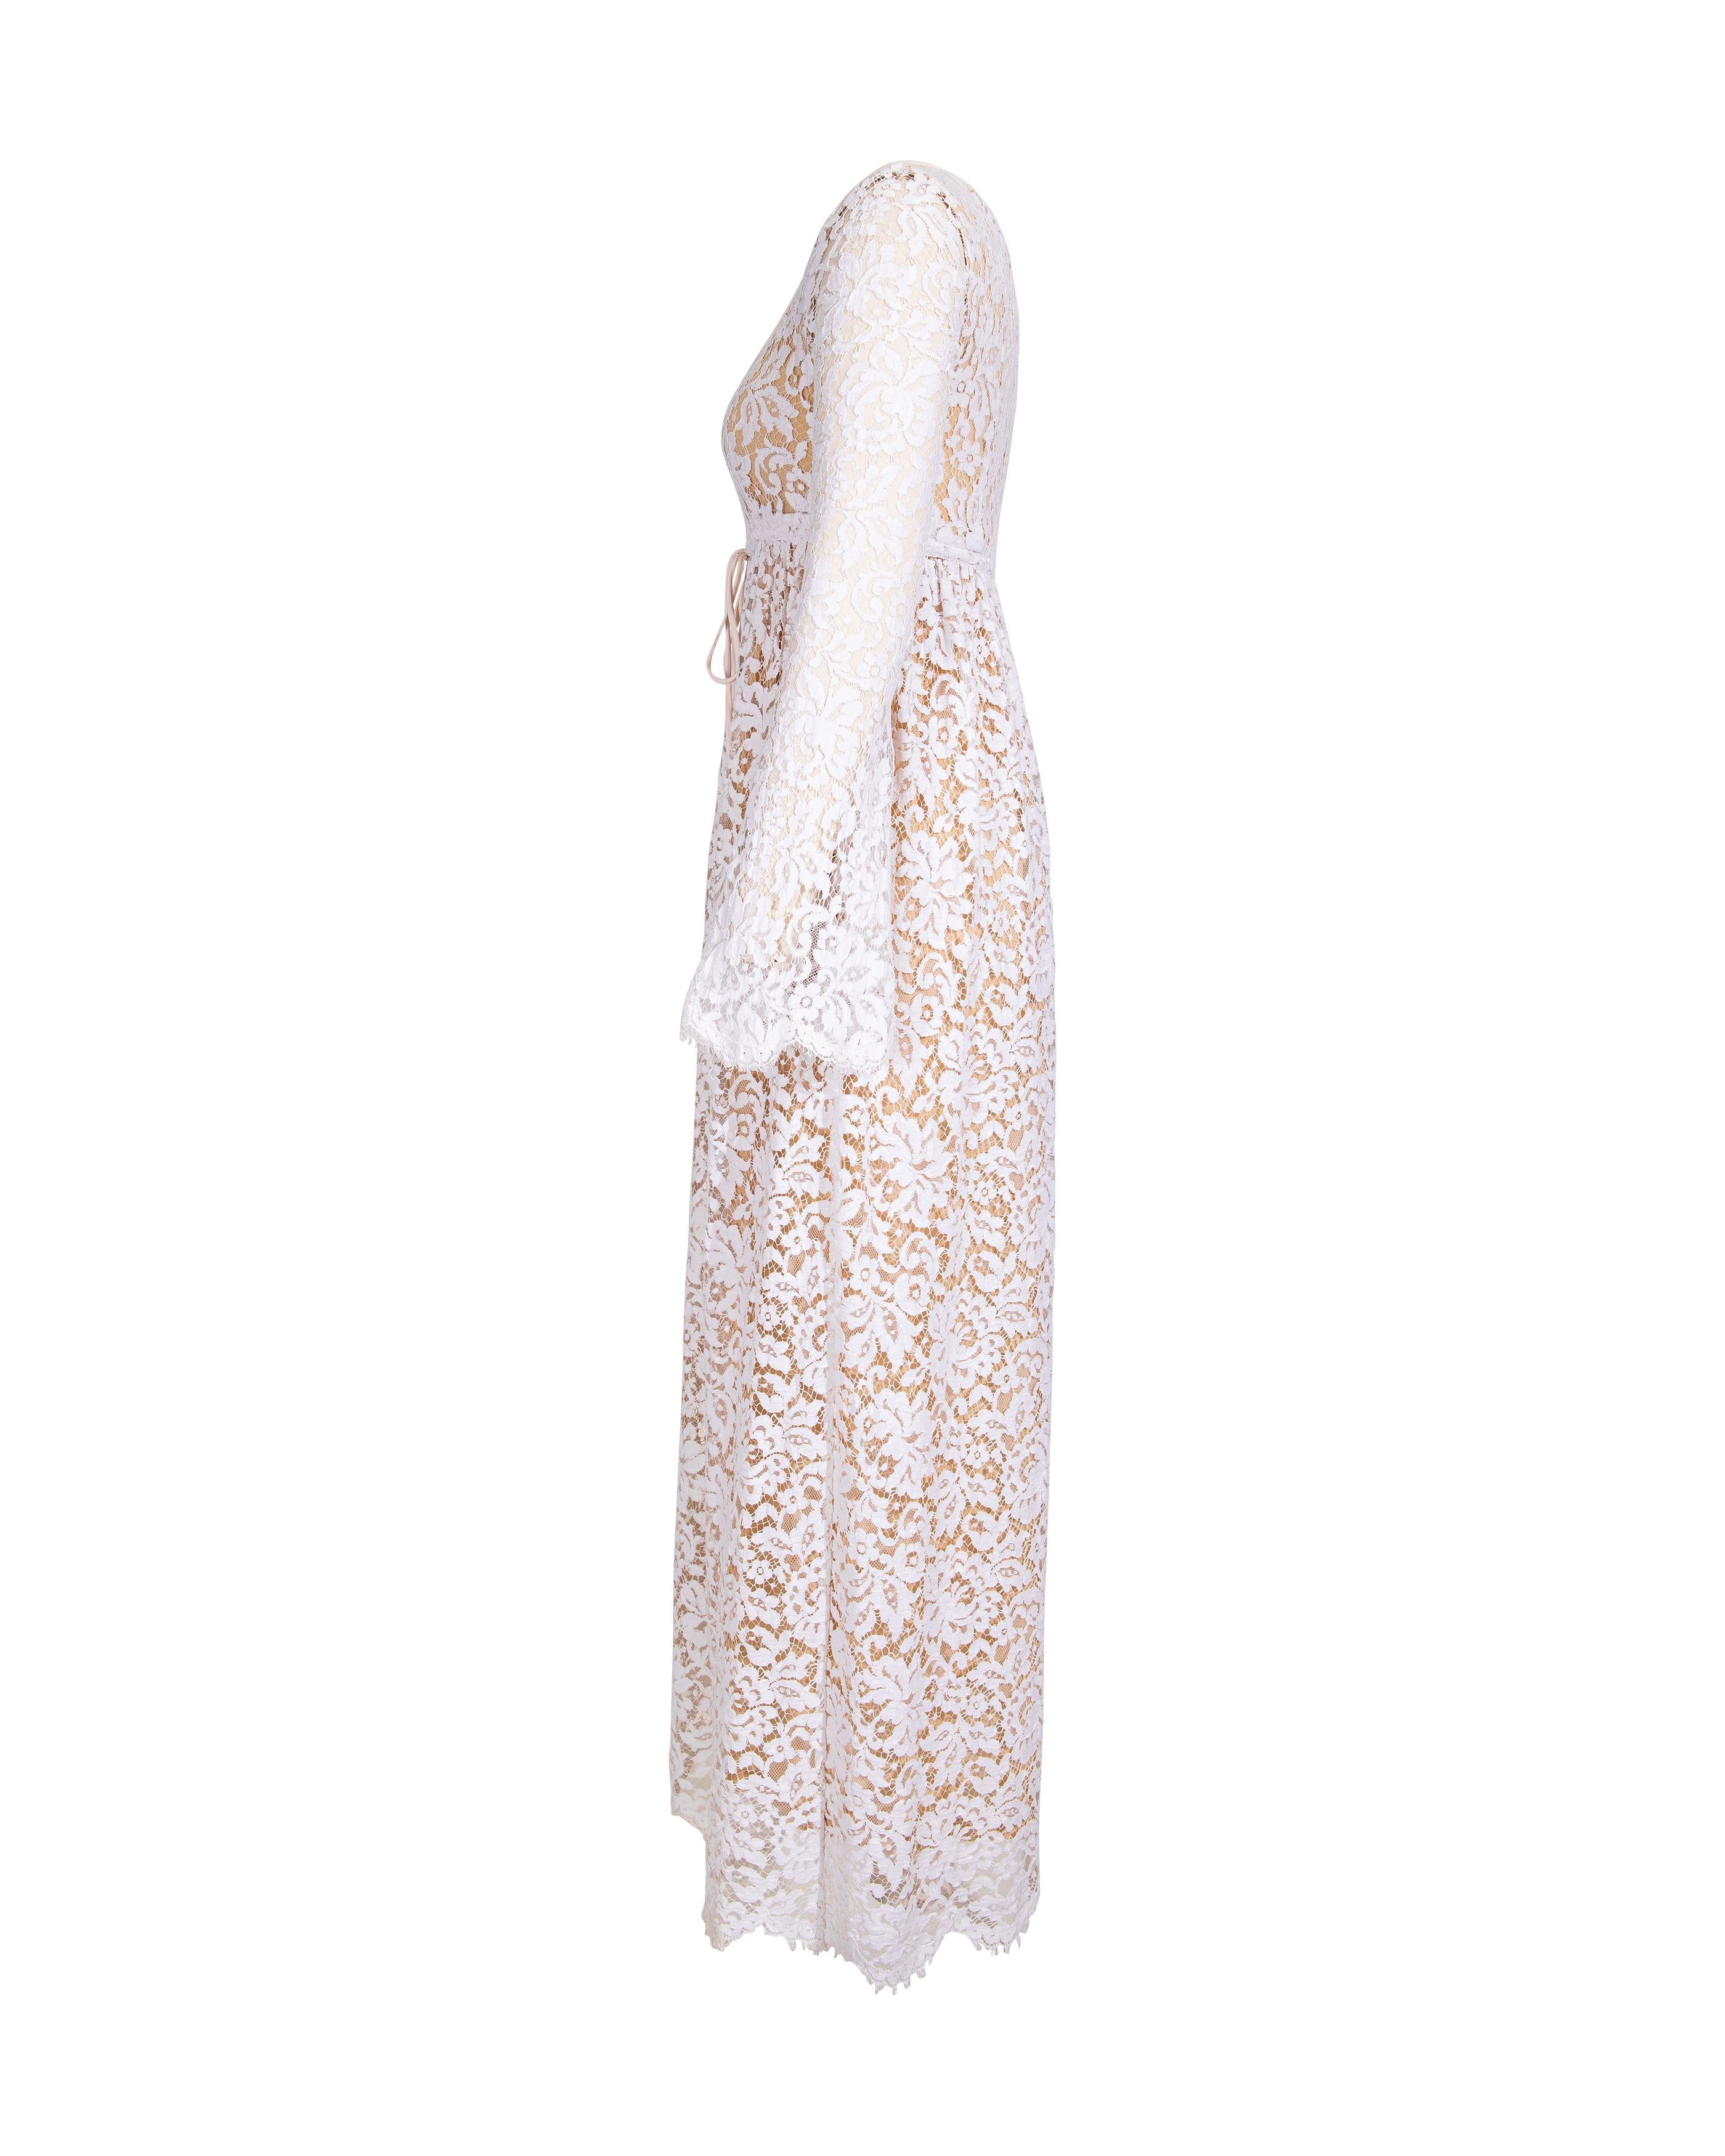 F/S 1996 Gucci by Tom Ford Weißes Spitzenkleid mit nudefarbenem Innenfutter Damen